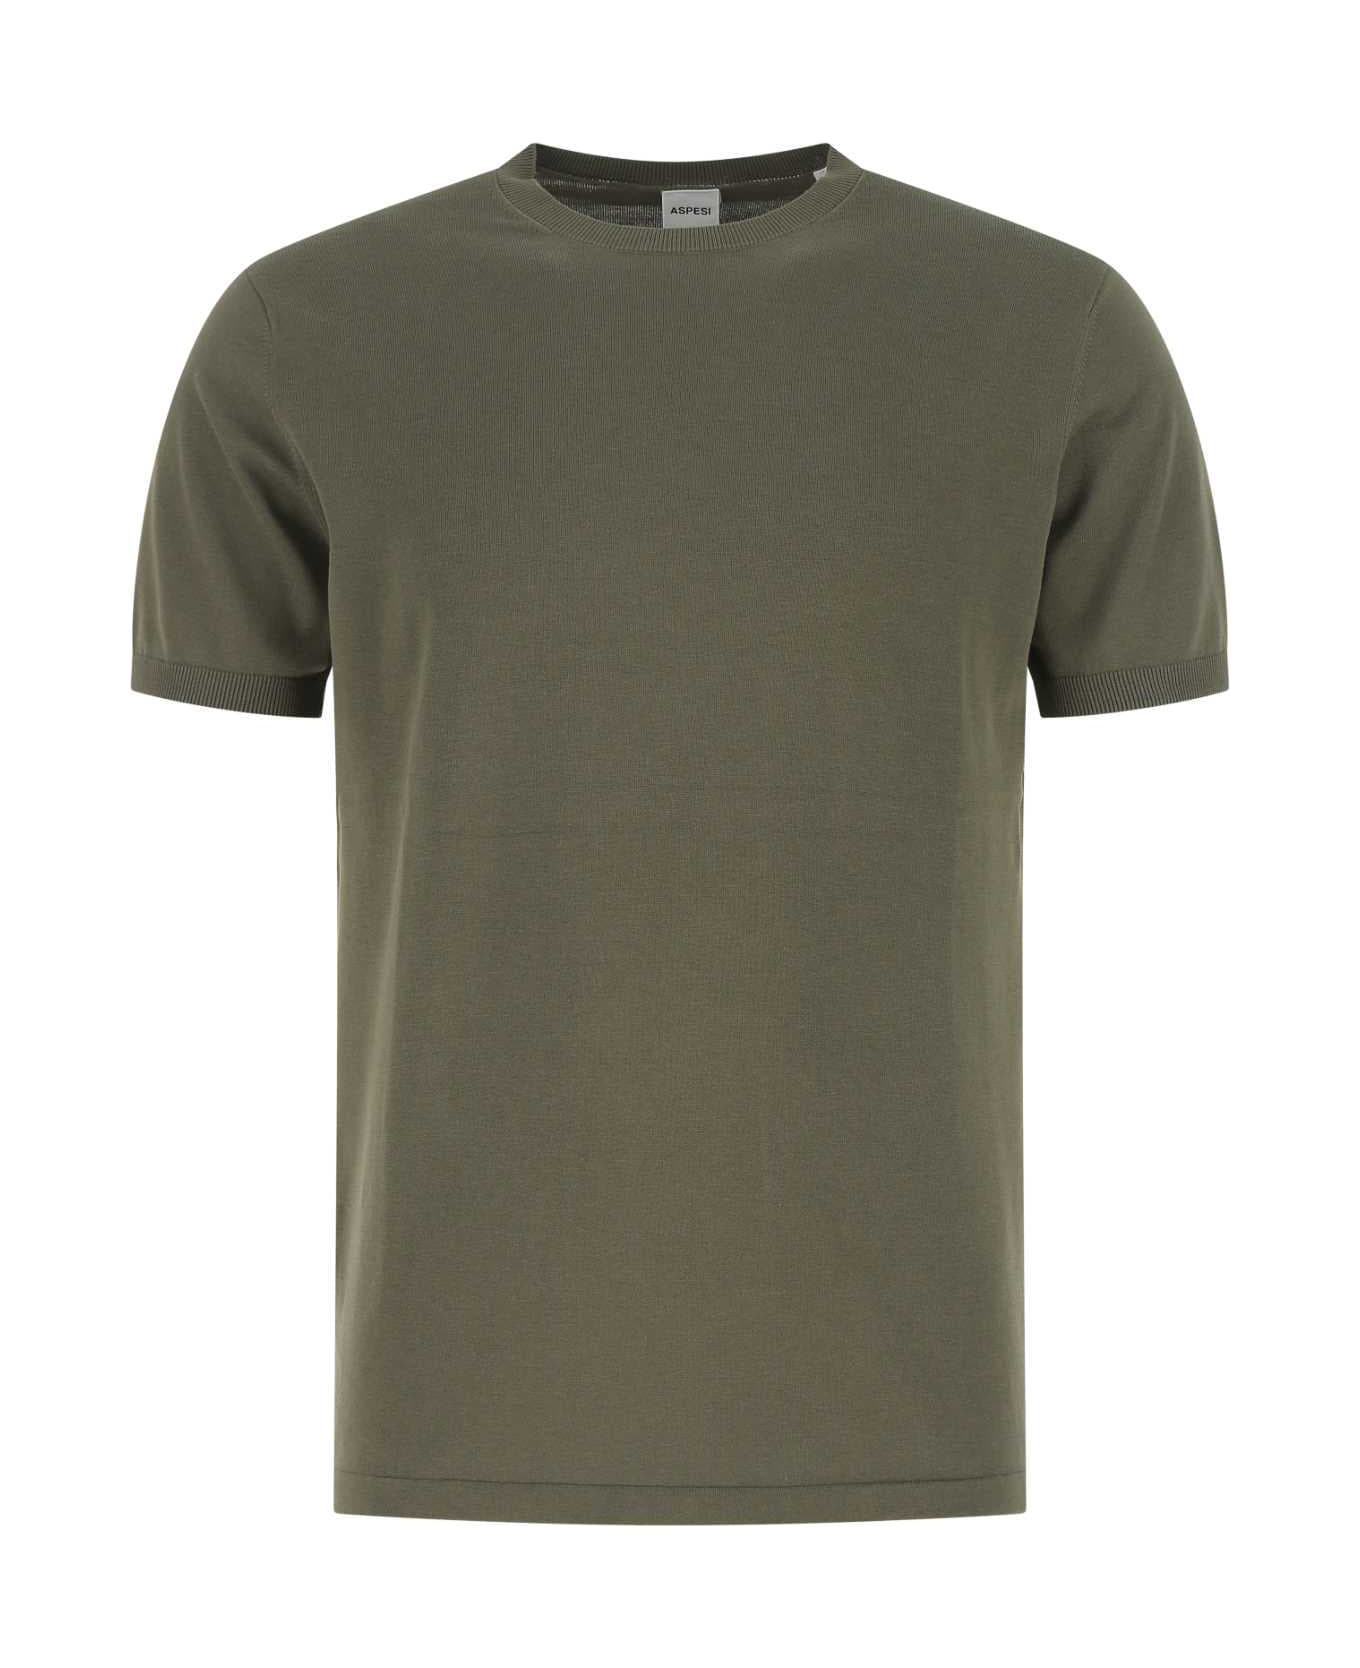 Aspesi Olive Green Cotton T-shirt - 01380